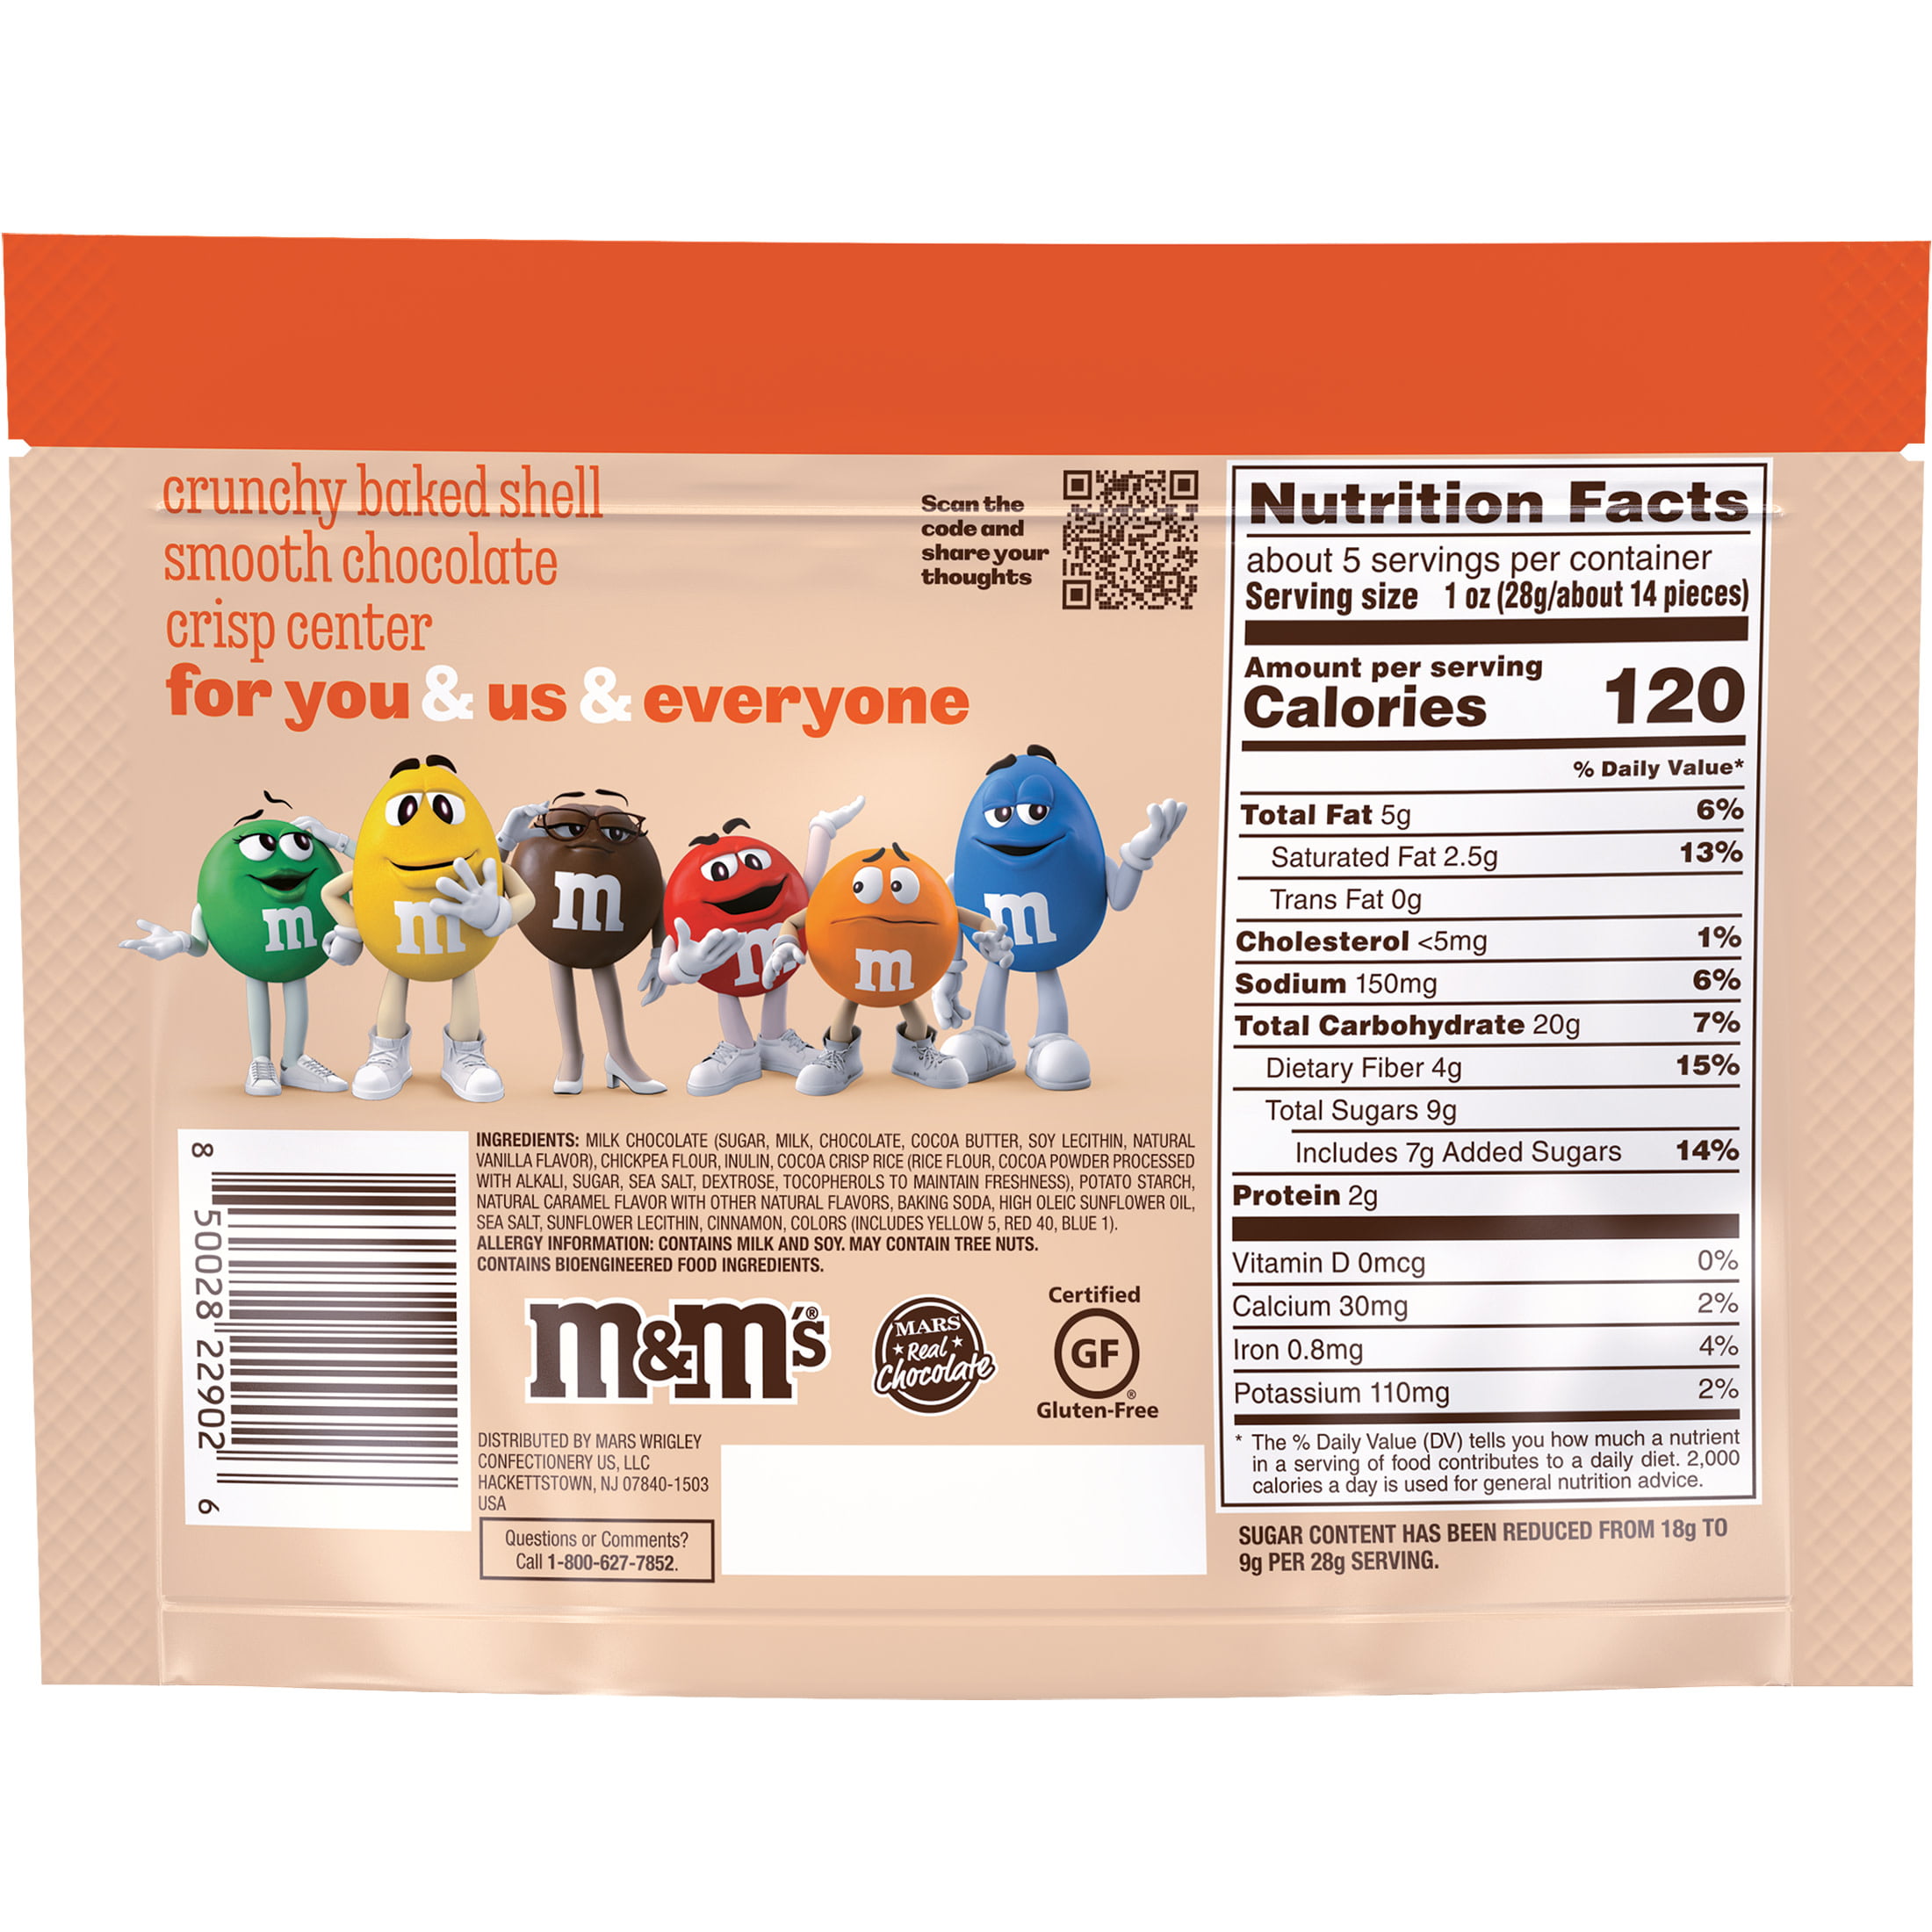 M&M’s Munchums Salted Caramel Chocolate Baked Snacks - 4.94oz. Bag